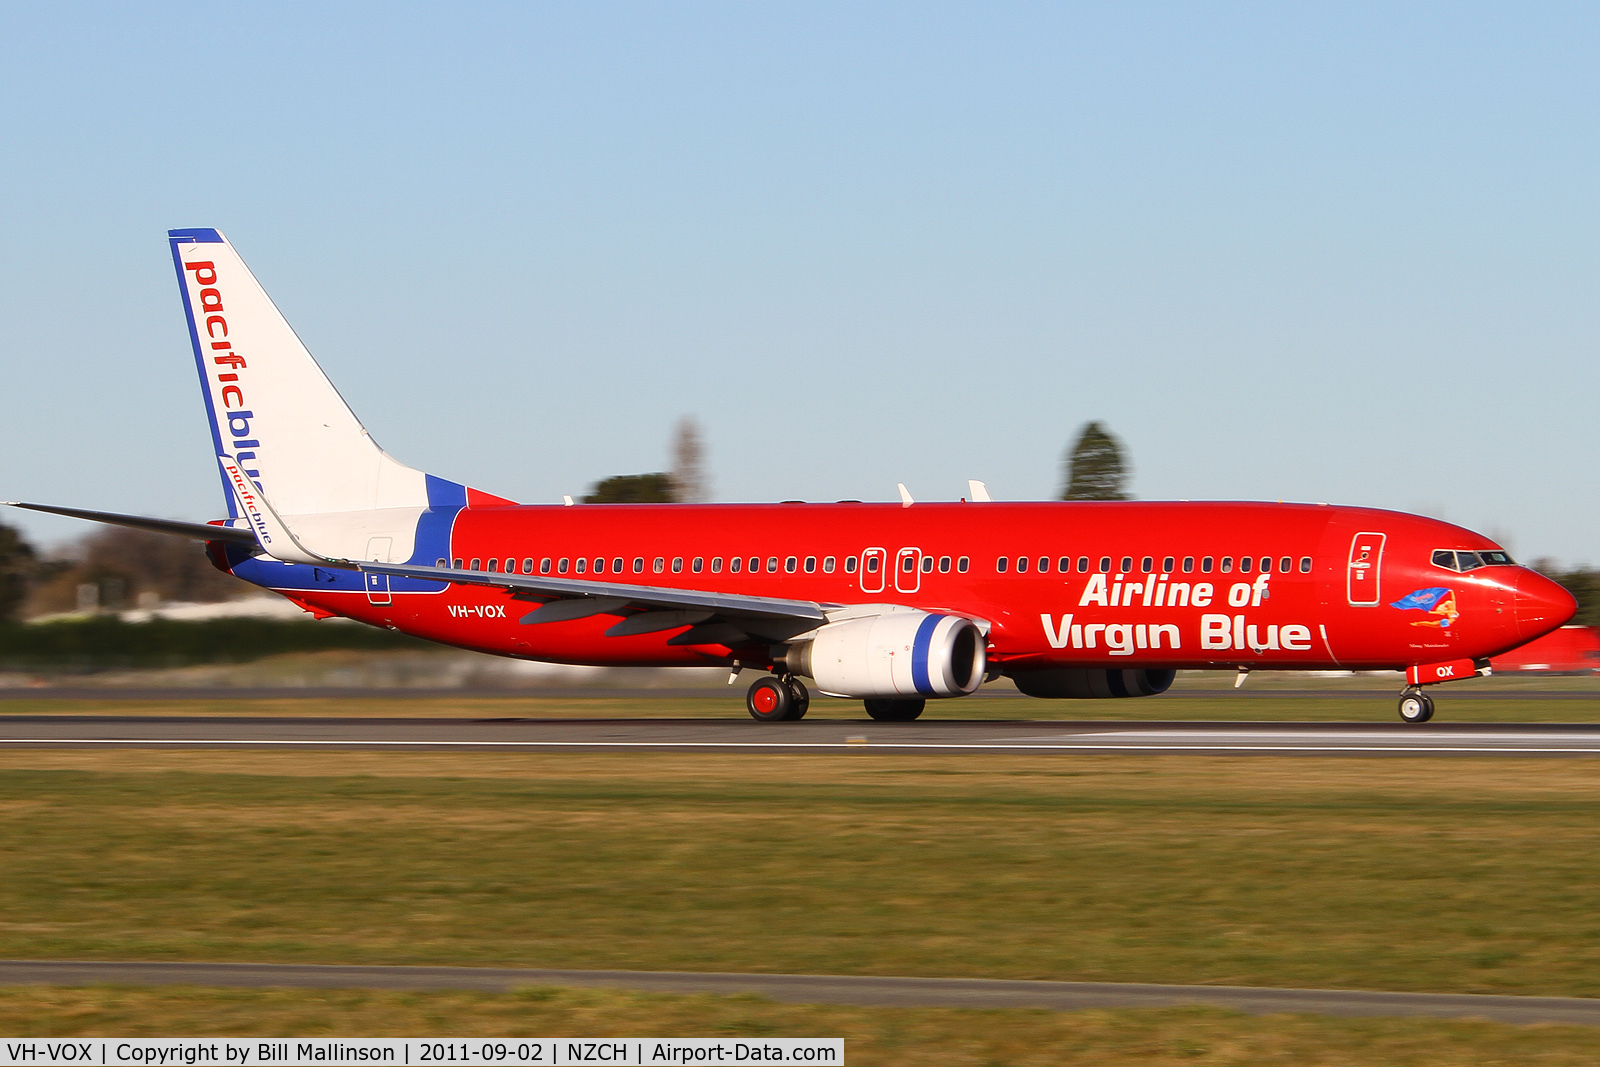 VH-VOX, 2004 Boeing 737-8BK C/N 33017, bring back the Pacific Blue scheme